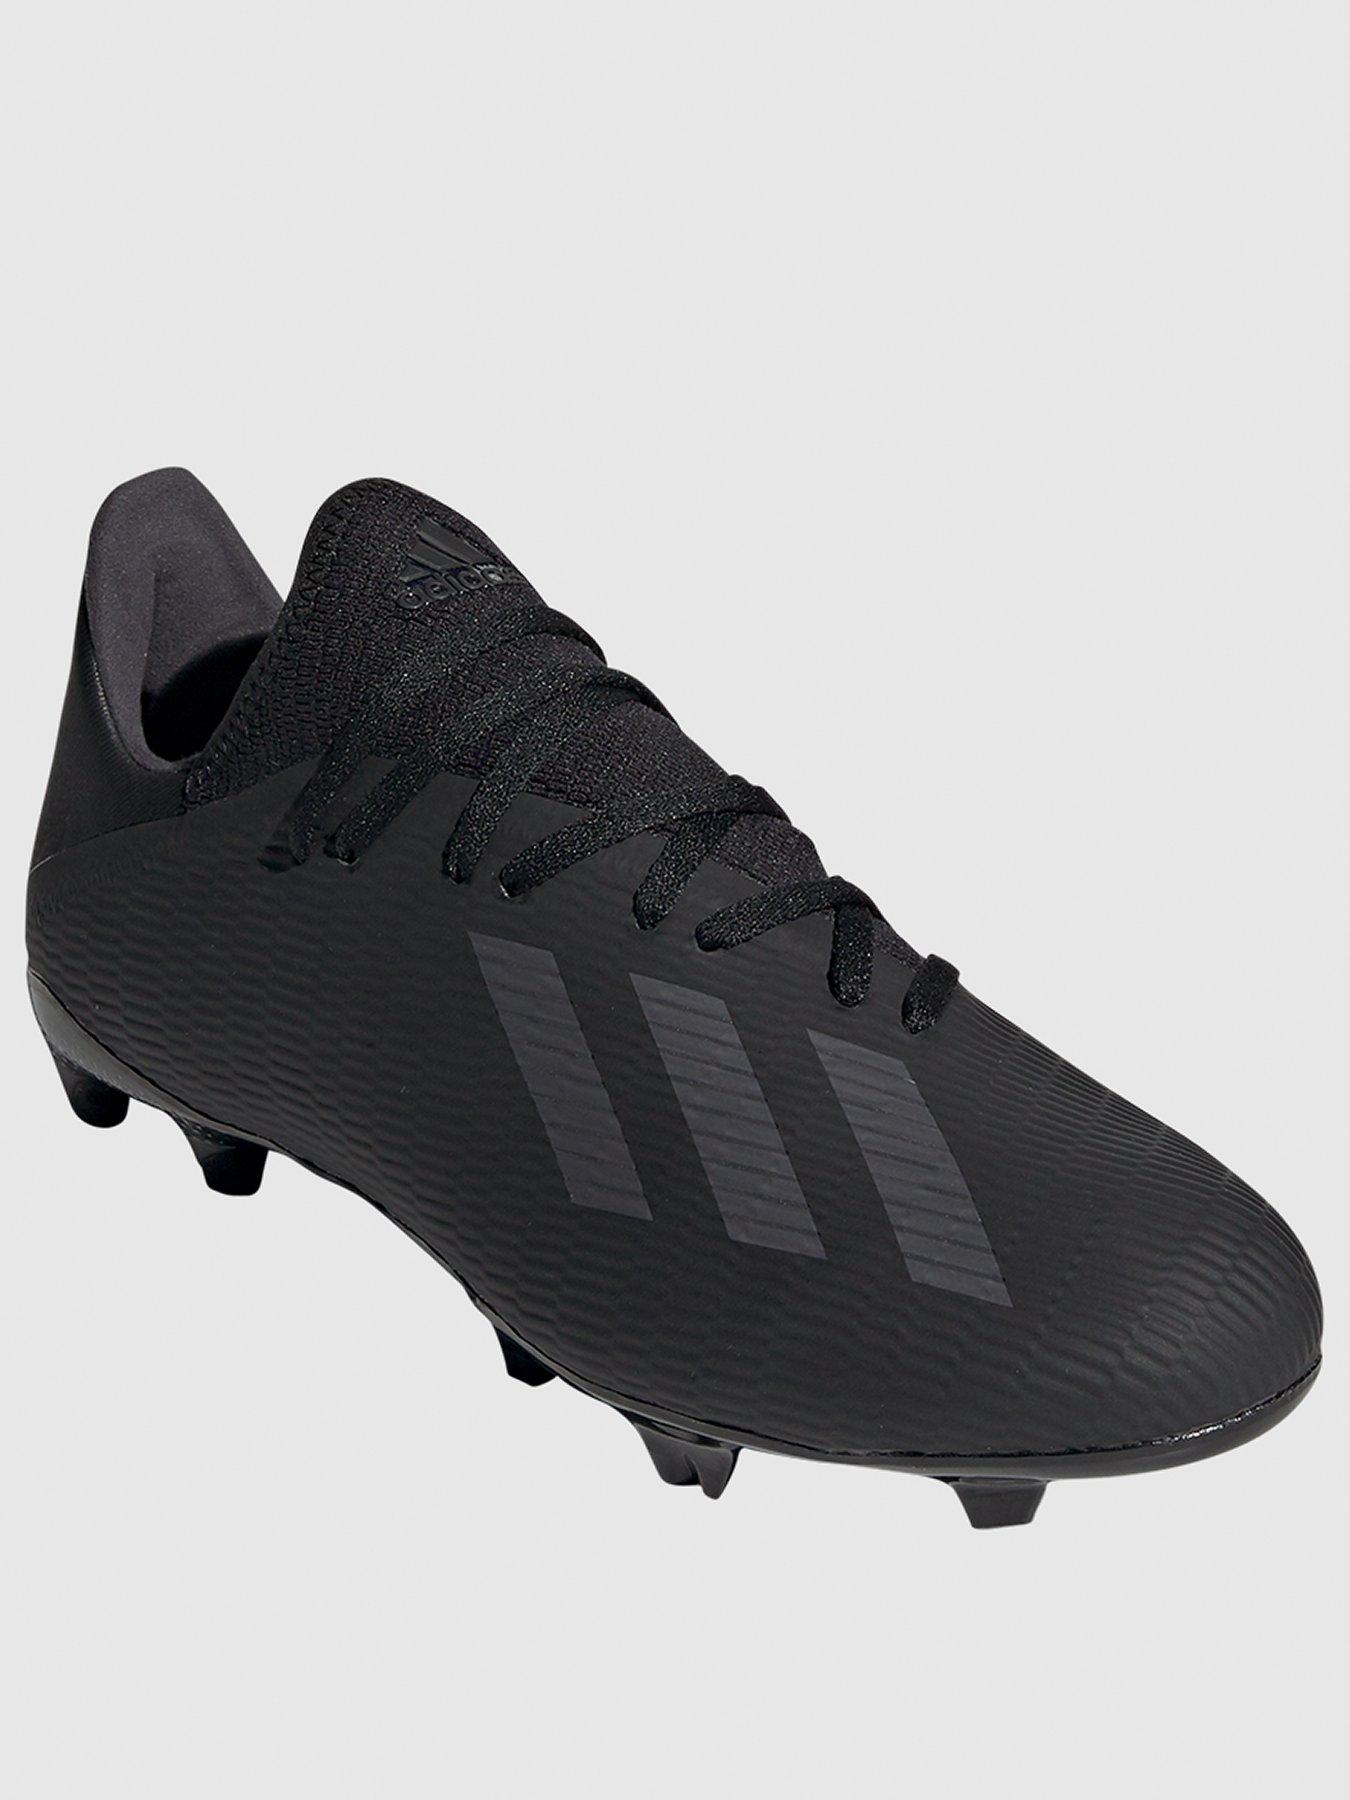 Adidas X 19 3 Firm Ground Football Boot Black